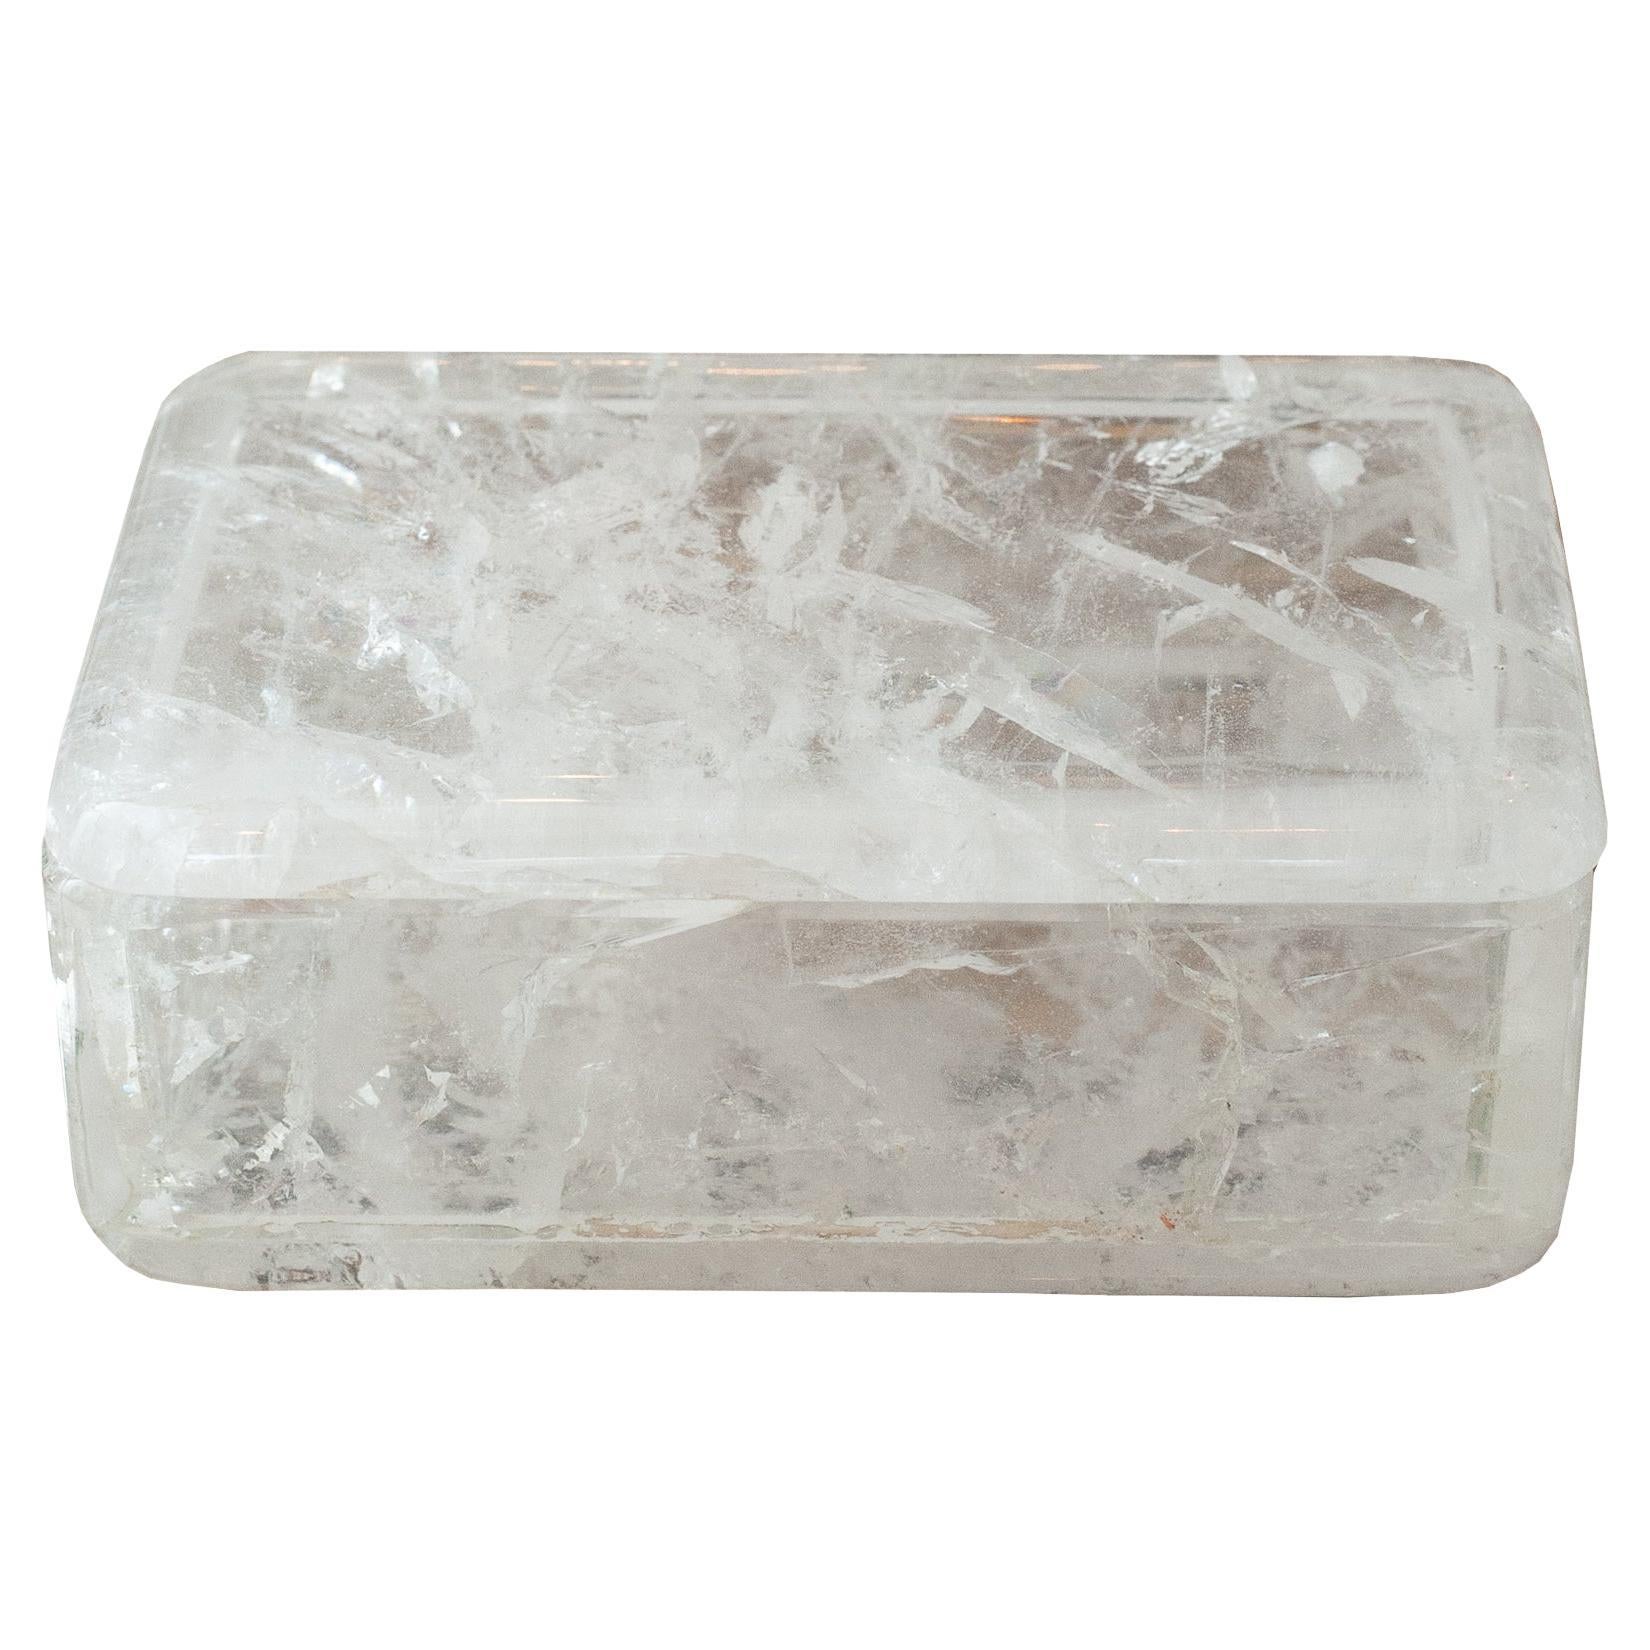 Contemporary Medium Rock Crystal Clear Quartz Box with Lid